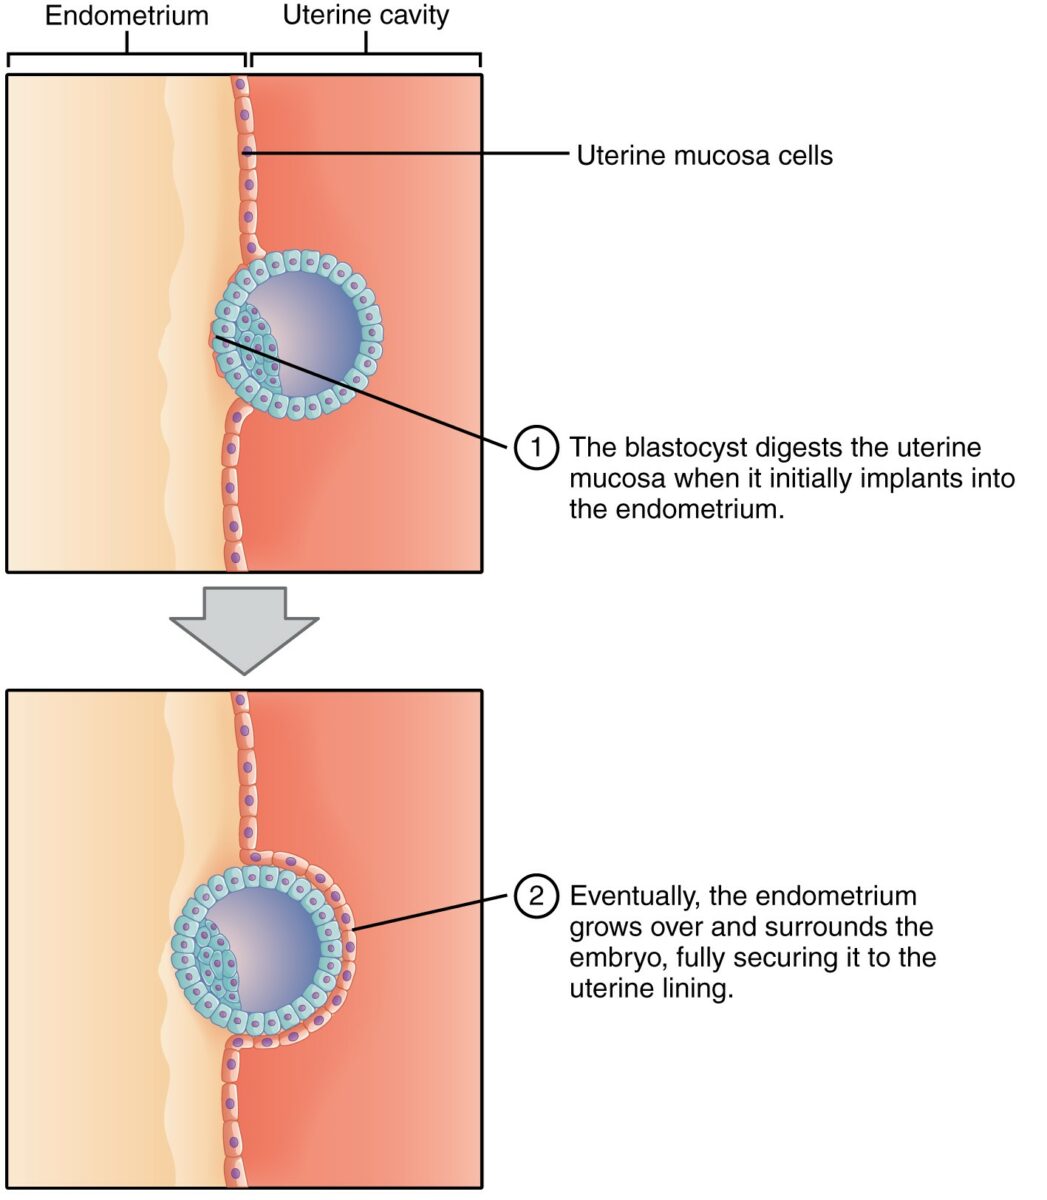 Implantation of the blastocyst